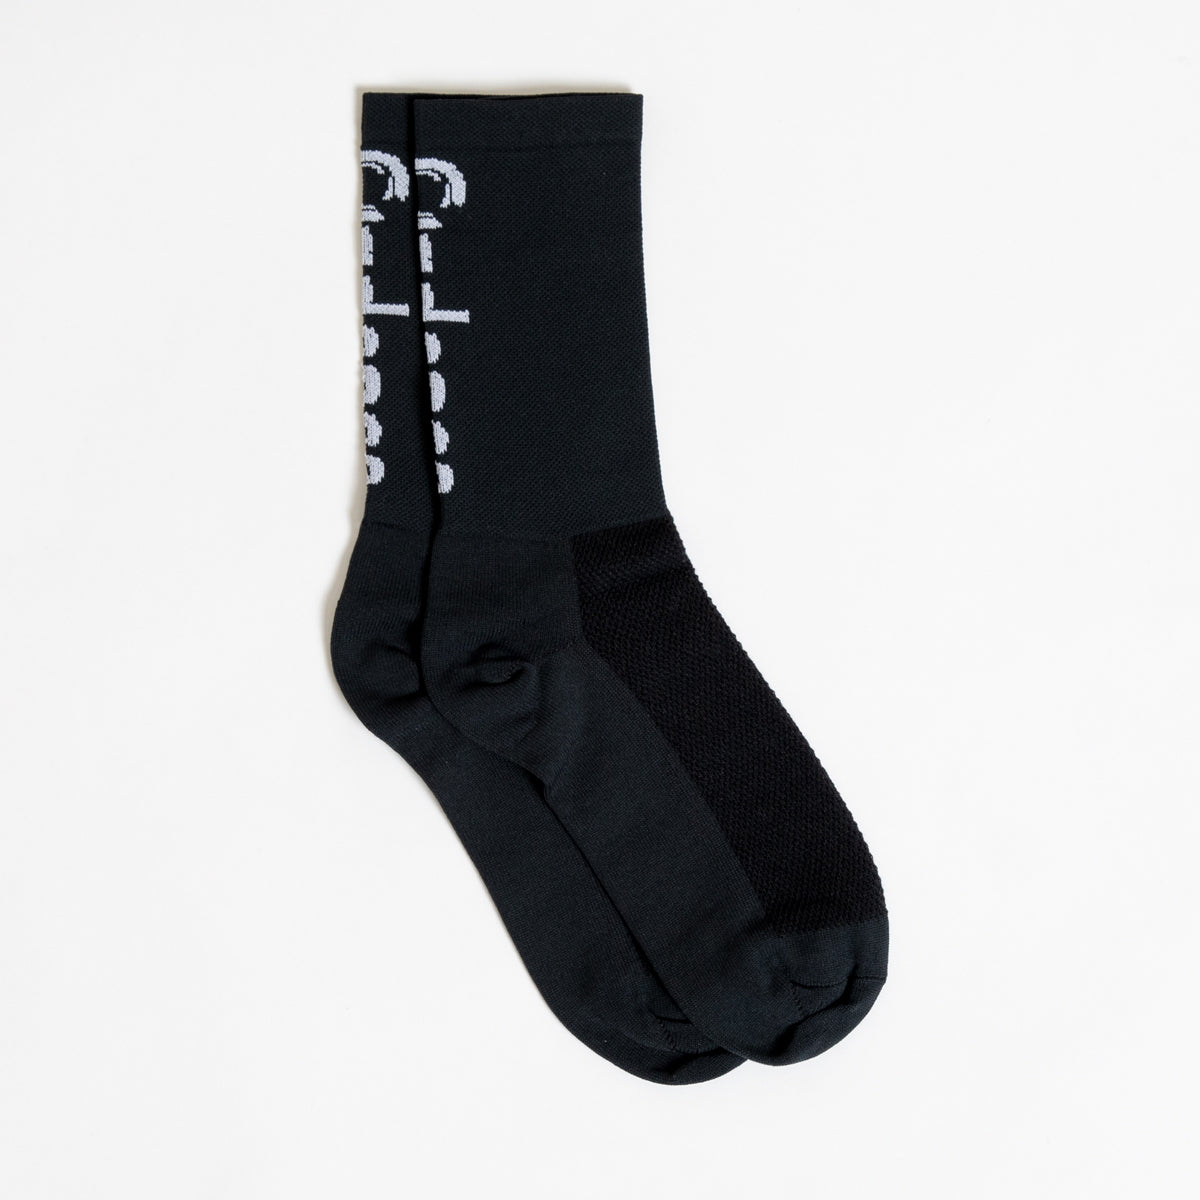 Cadence Stock Socks - Cadence Collection